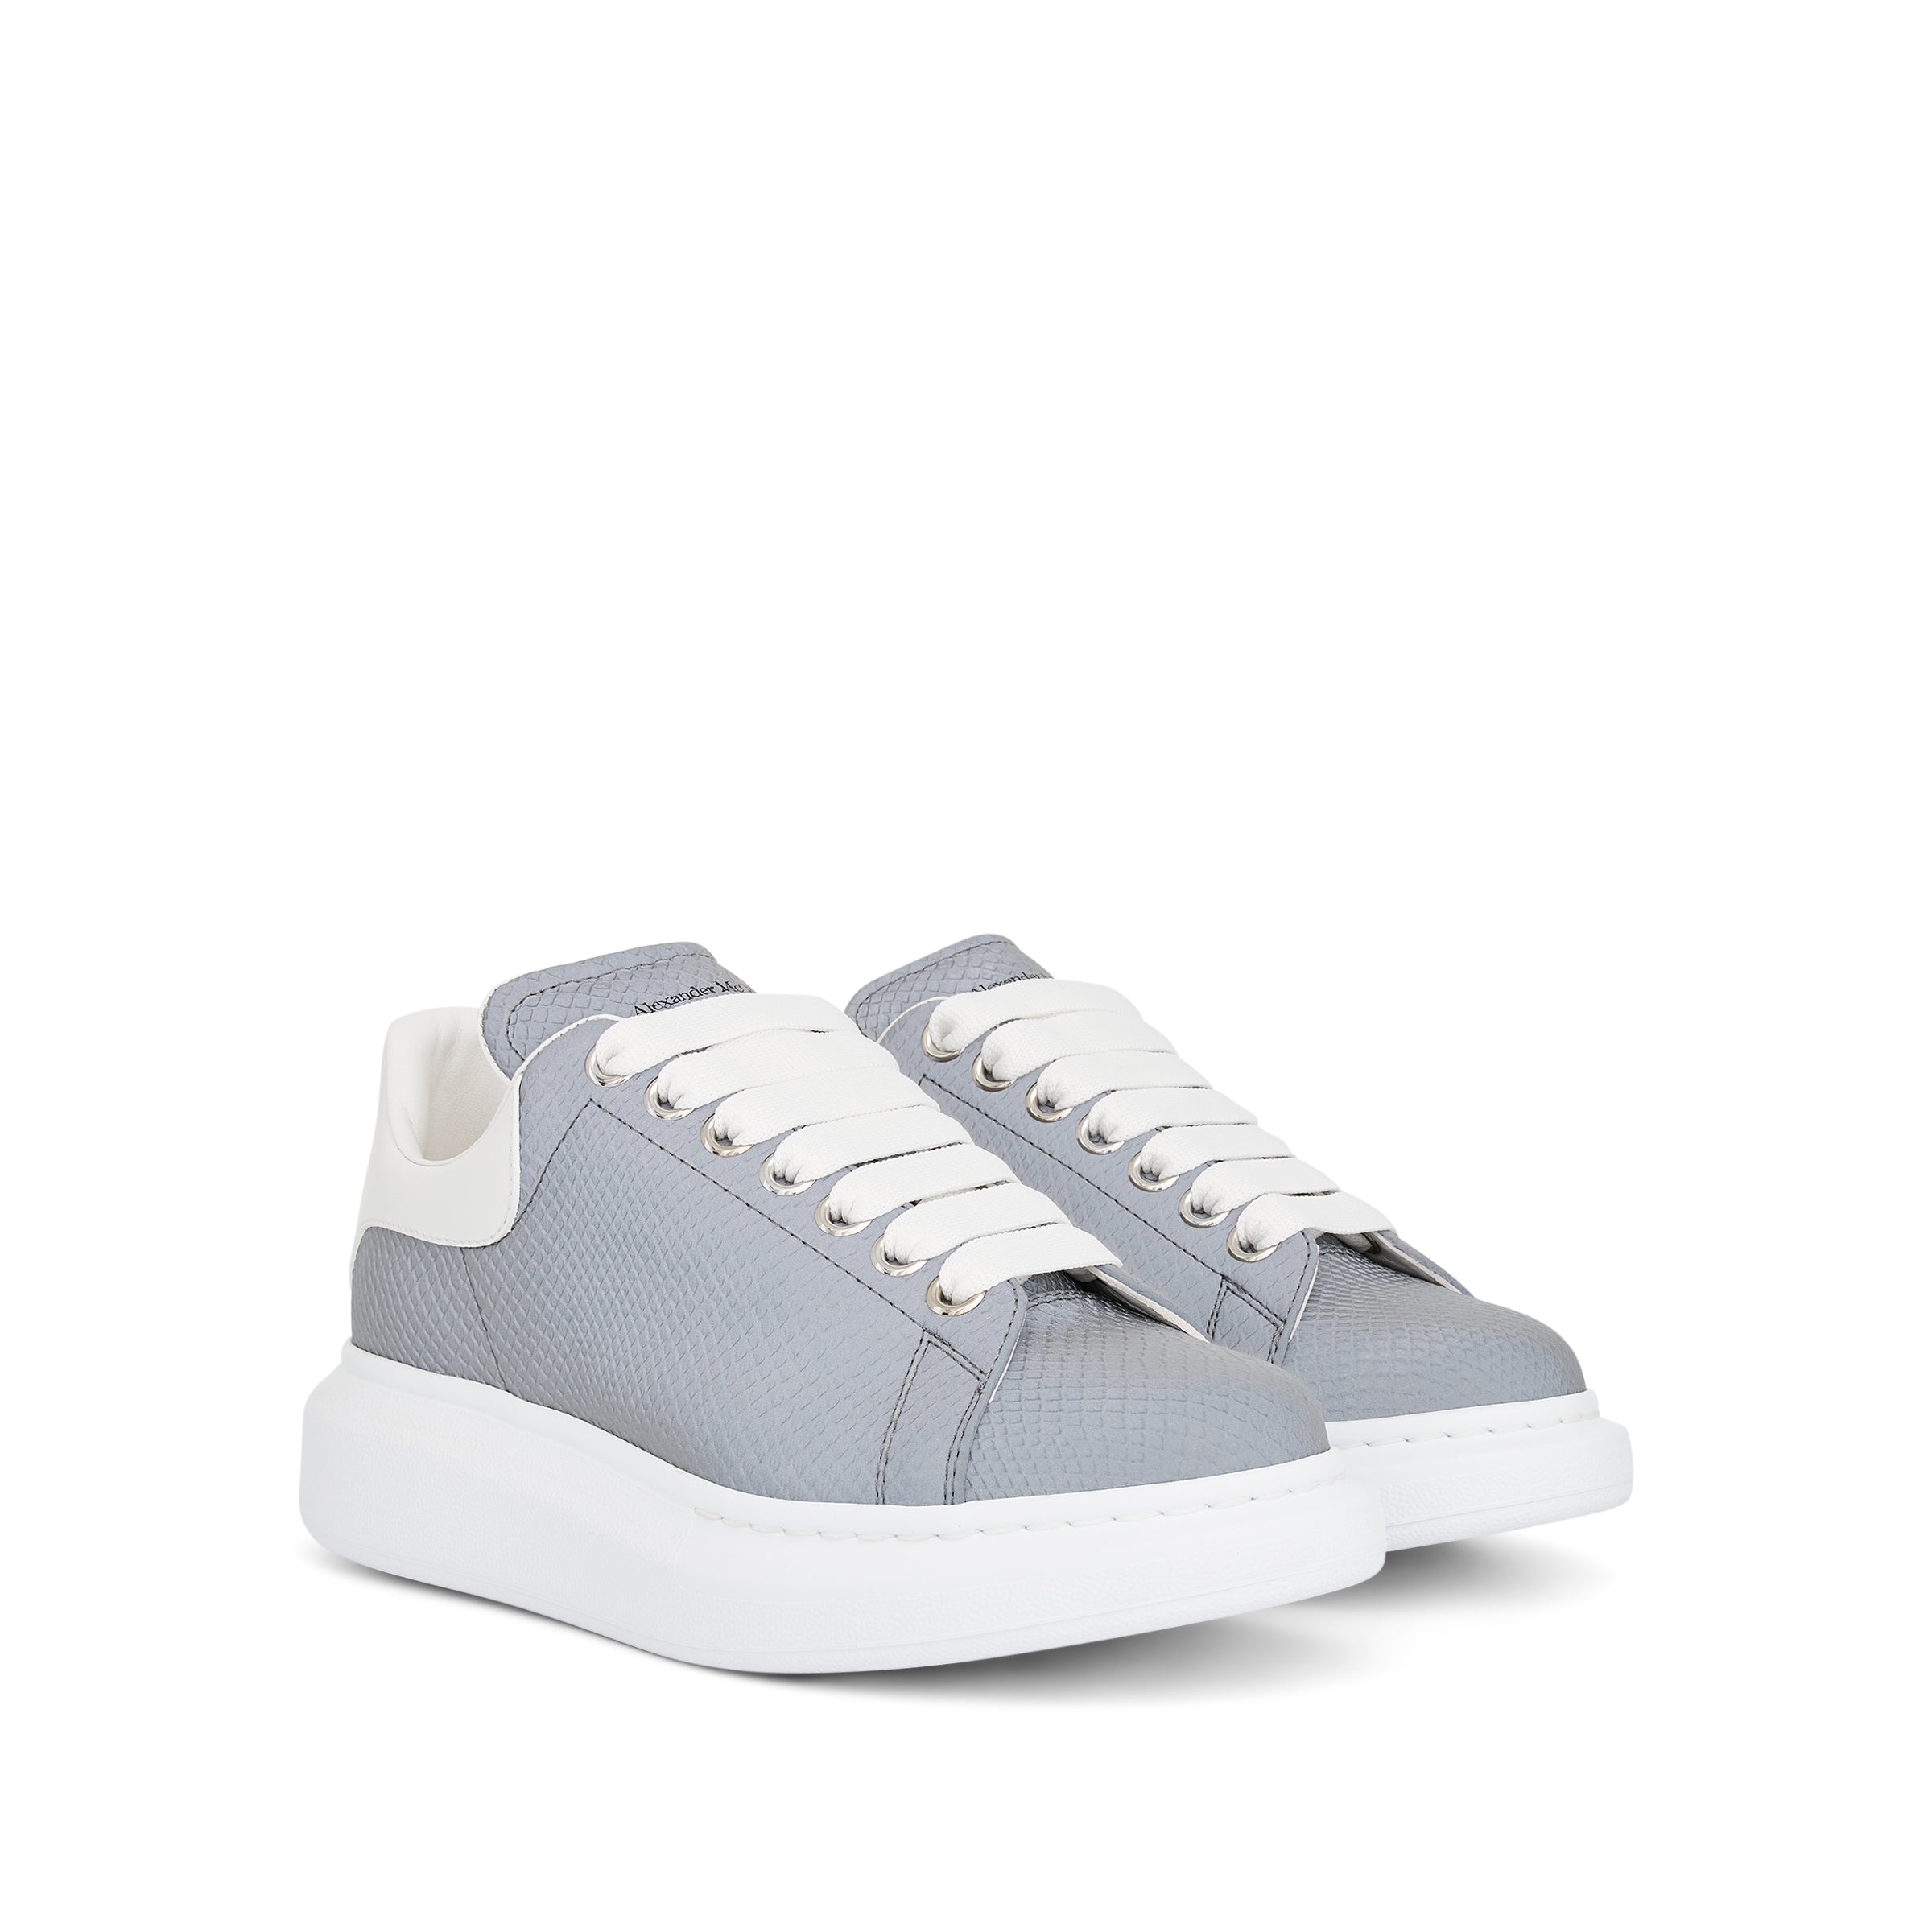 Larry Reflective Sneaker in Grey/White - 2